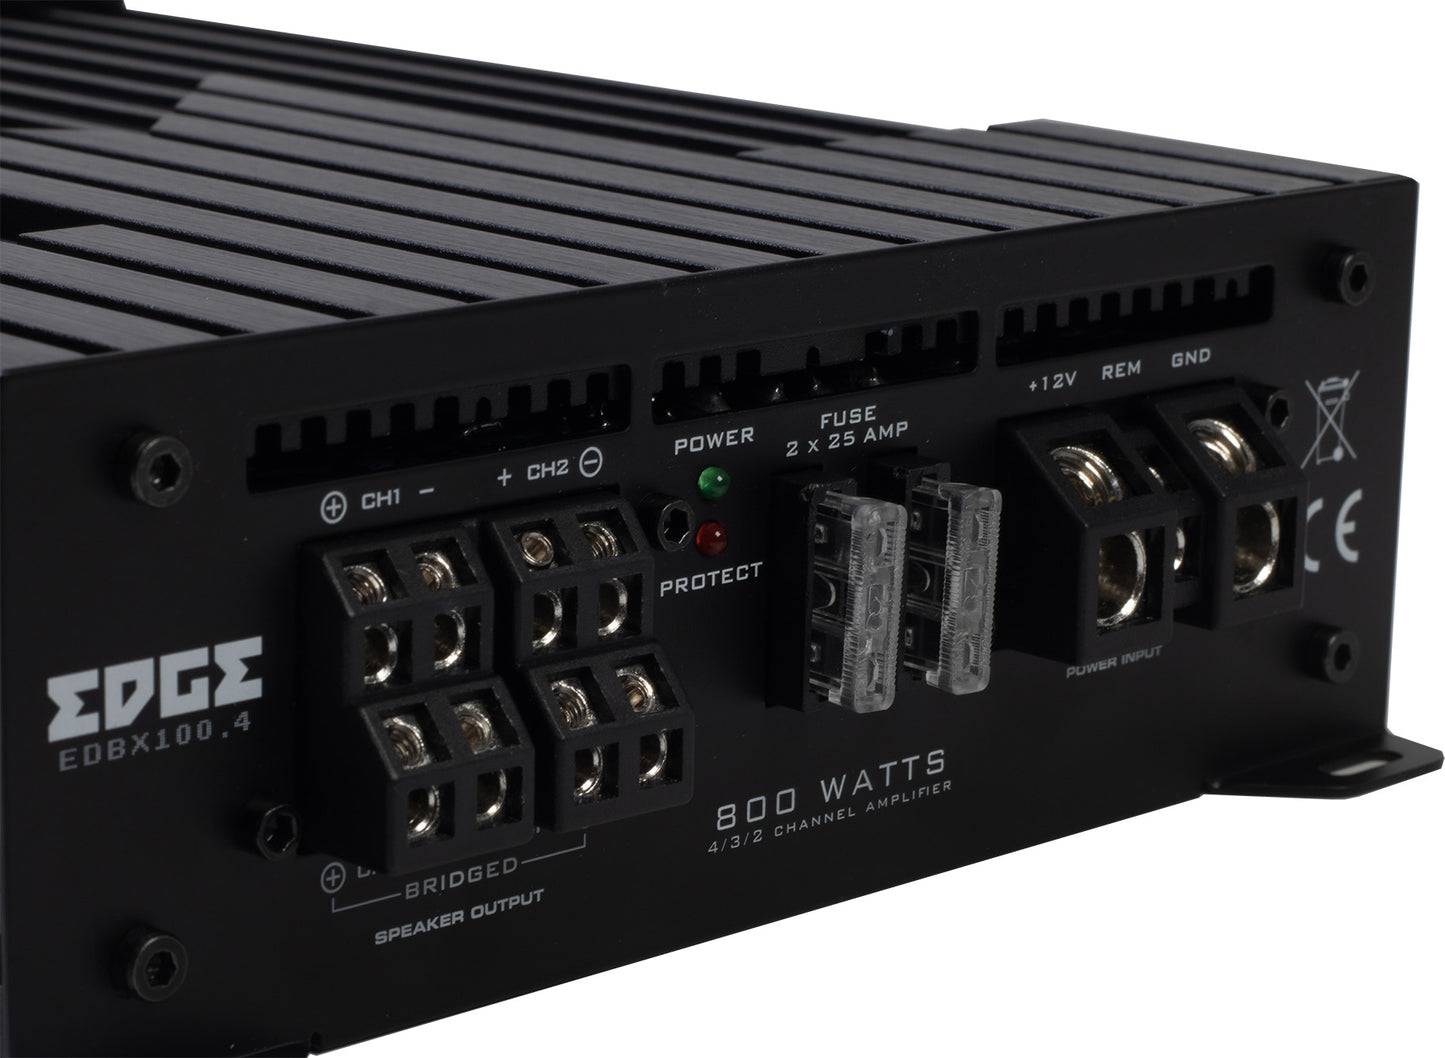 EDBX100.4-E1 | EDGE DBX Series 4 Channel 800 watts Amplifier